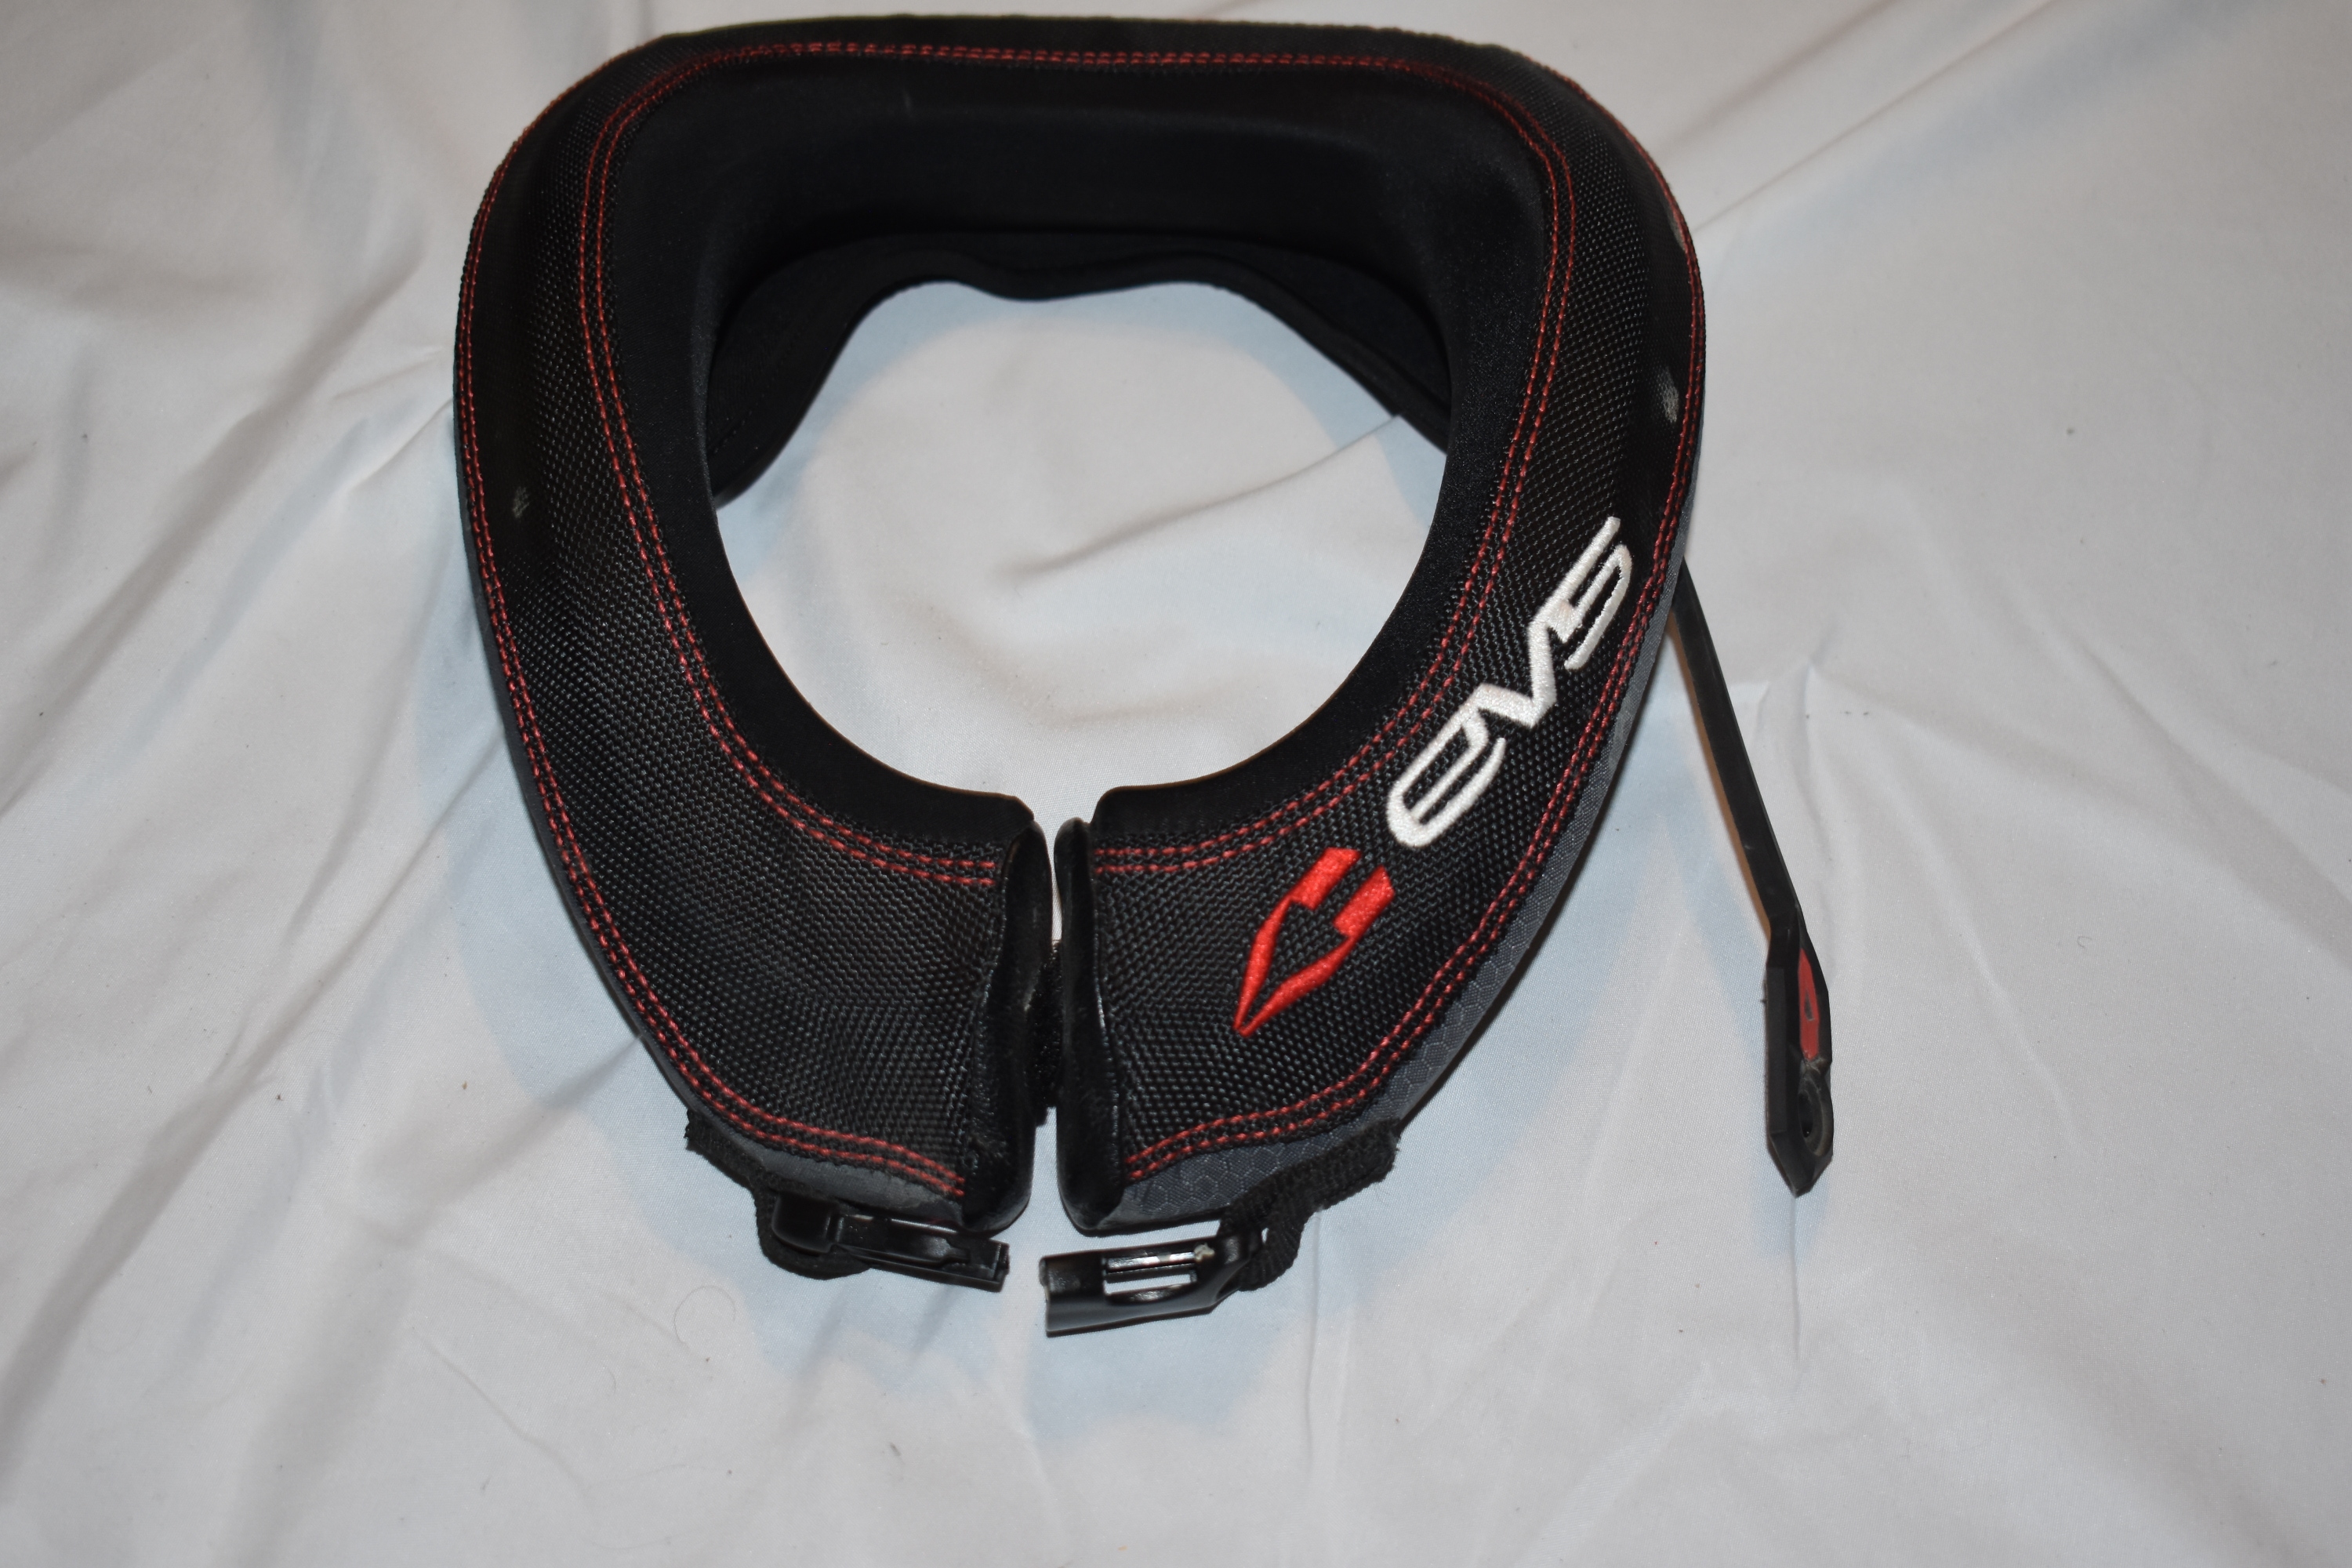 EVS R3 Motocross Race Collar - Great Condition!